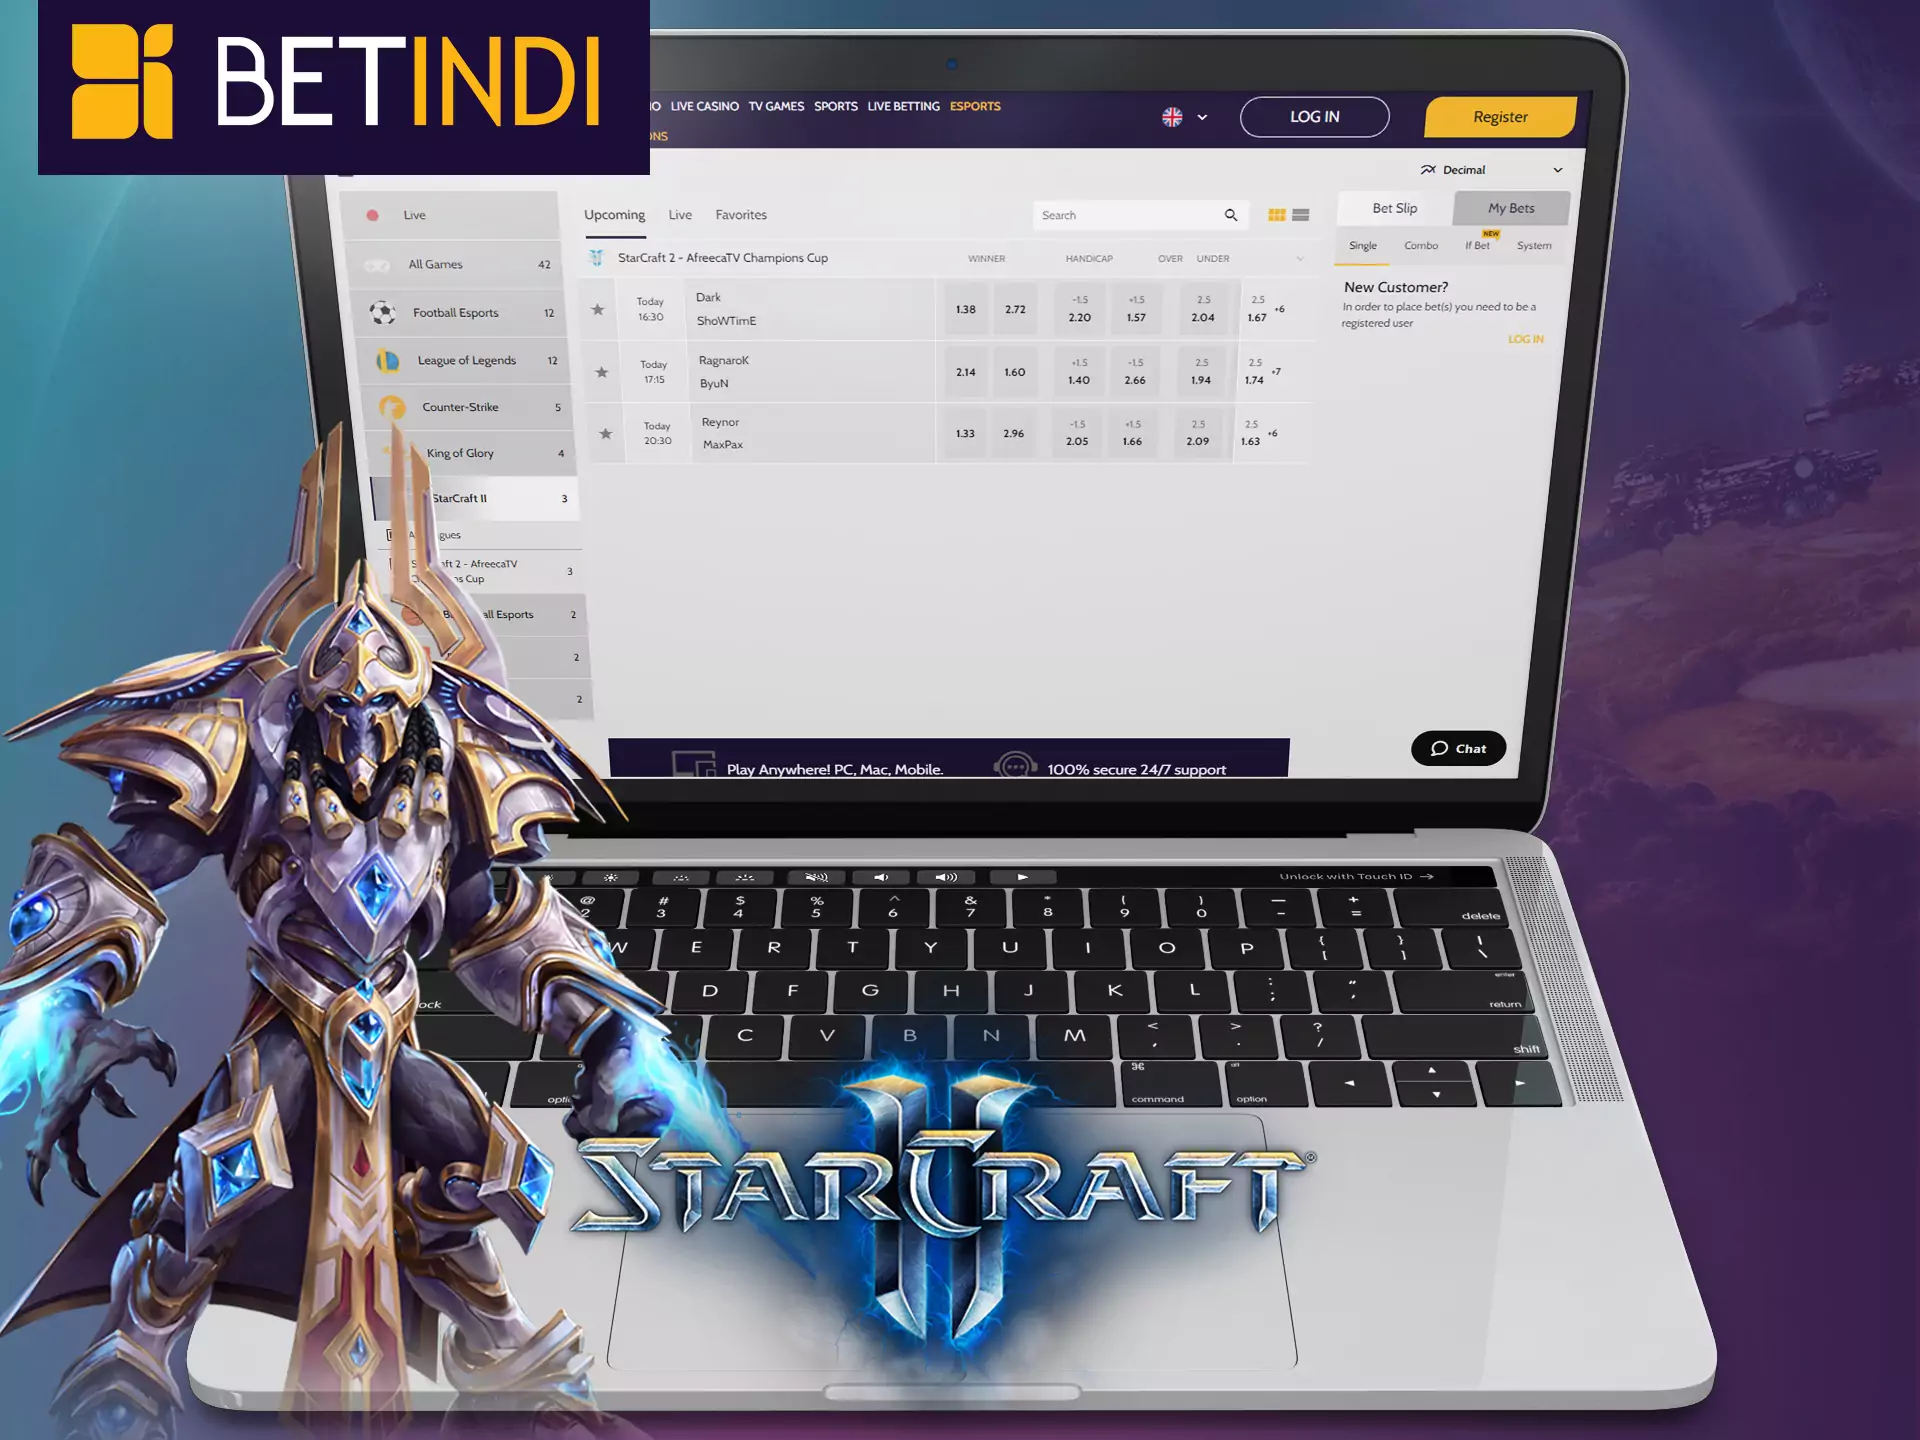 Place bets on Starcraft 2 on Betindi, have fun playing.